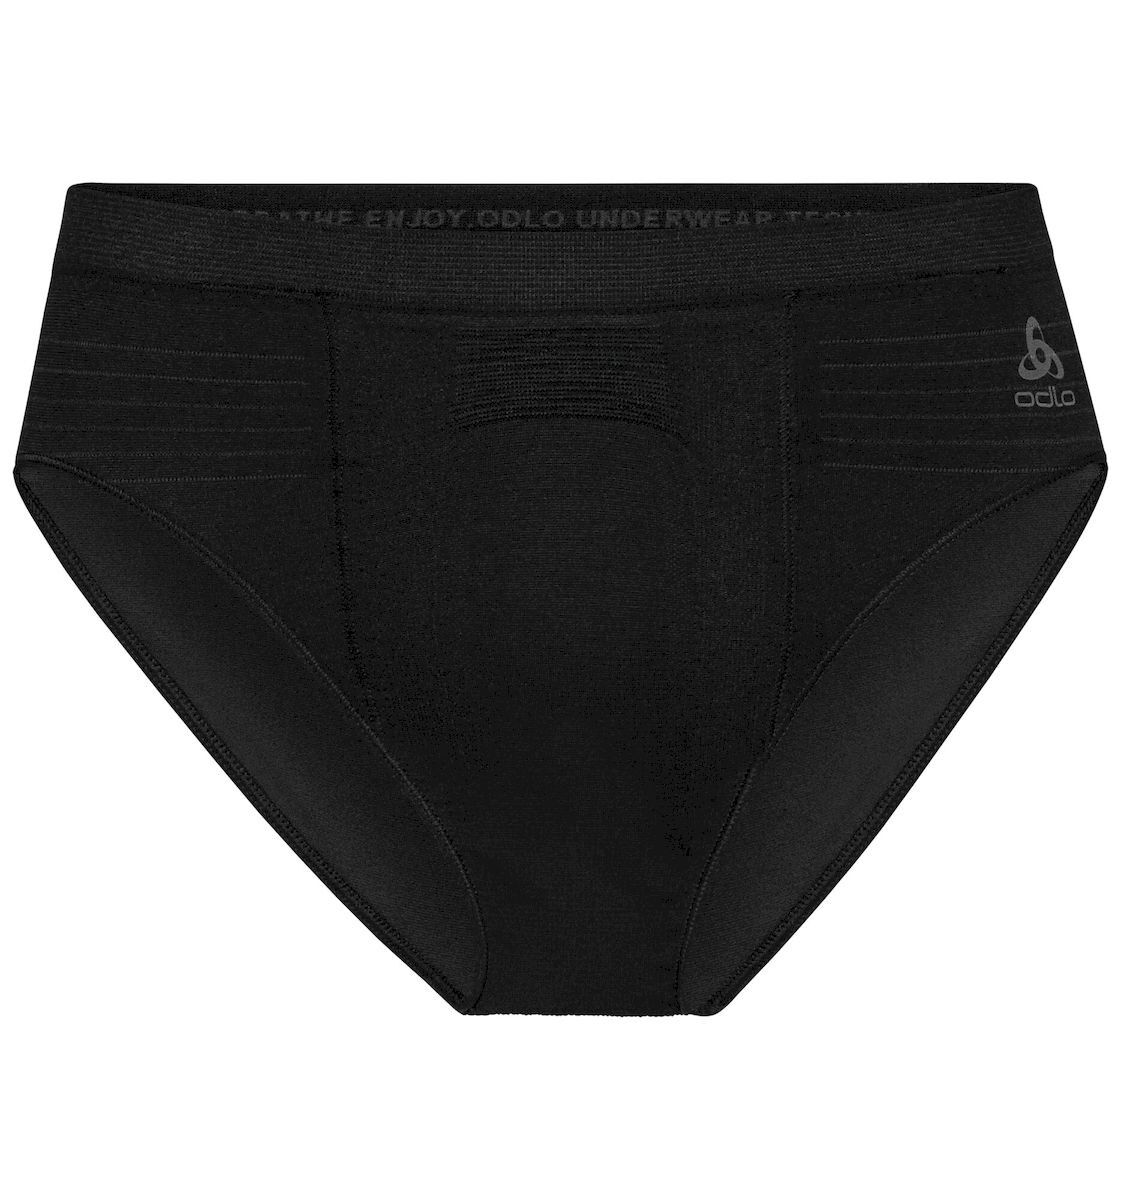 Odlo Suw Bottom Brief Performance Light - Men's underwear | Hardloop